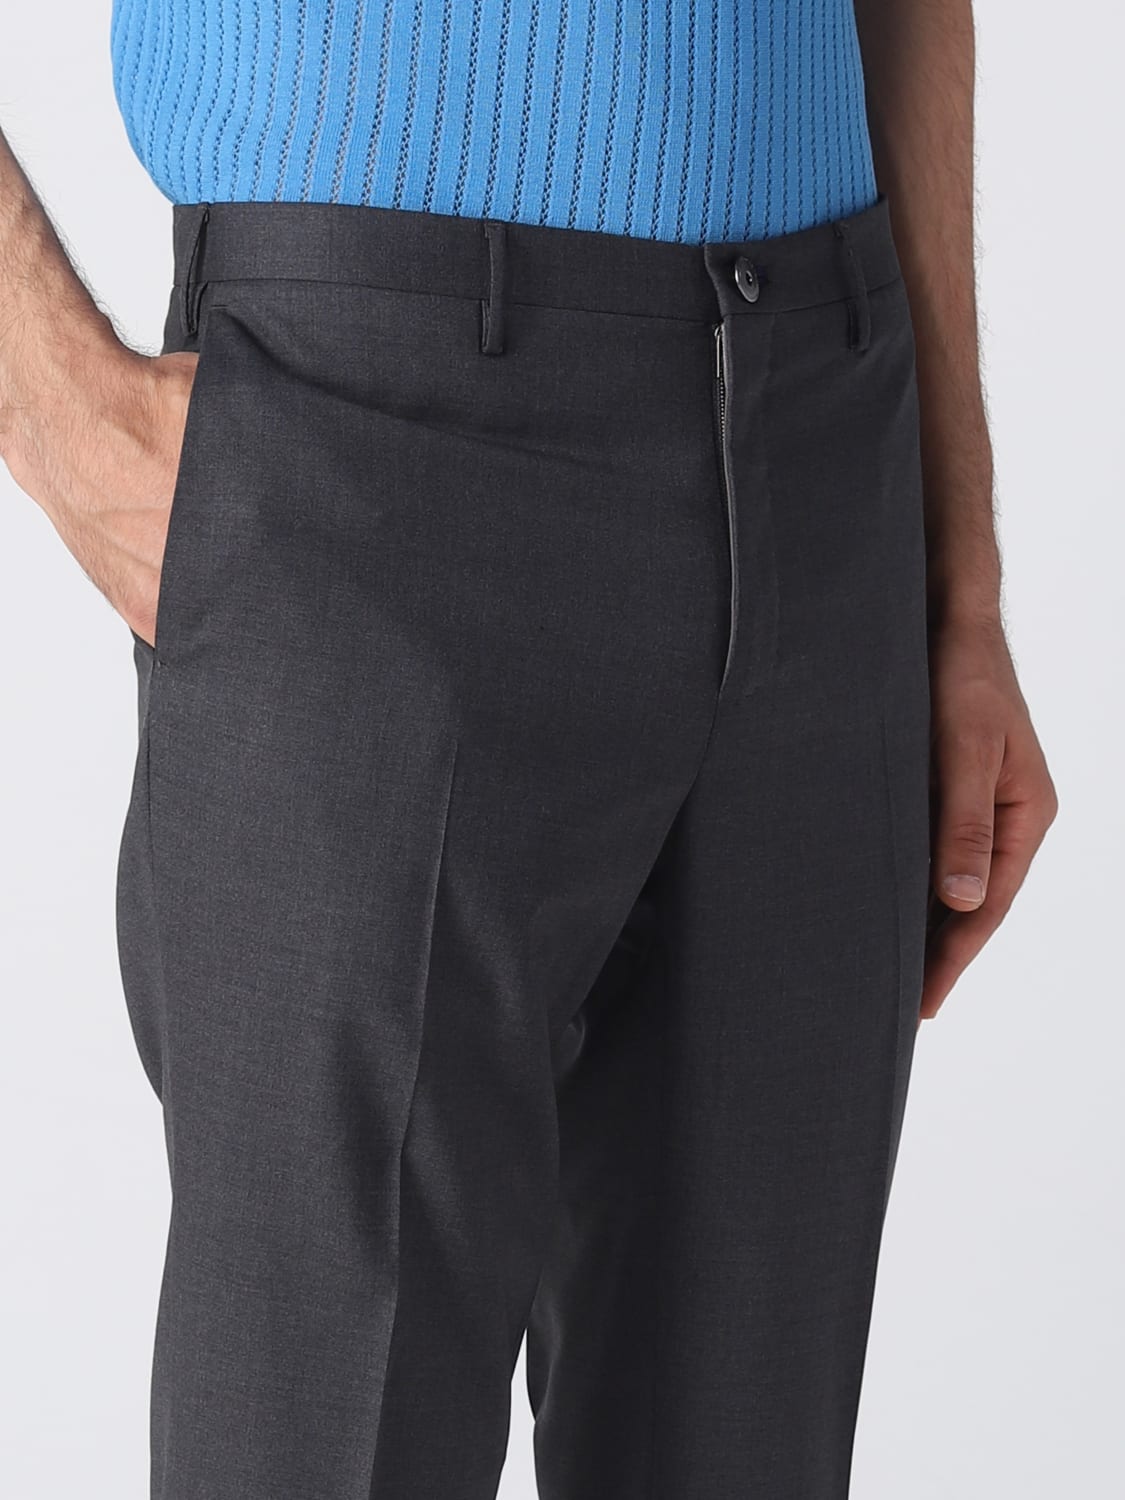 Incotex Outlet: pants for man - Grey | Incotex pants ZR851T5855T